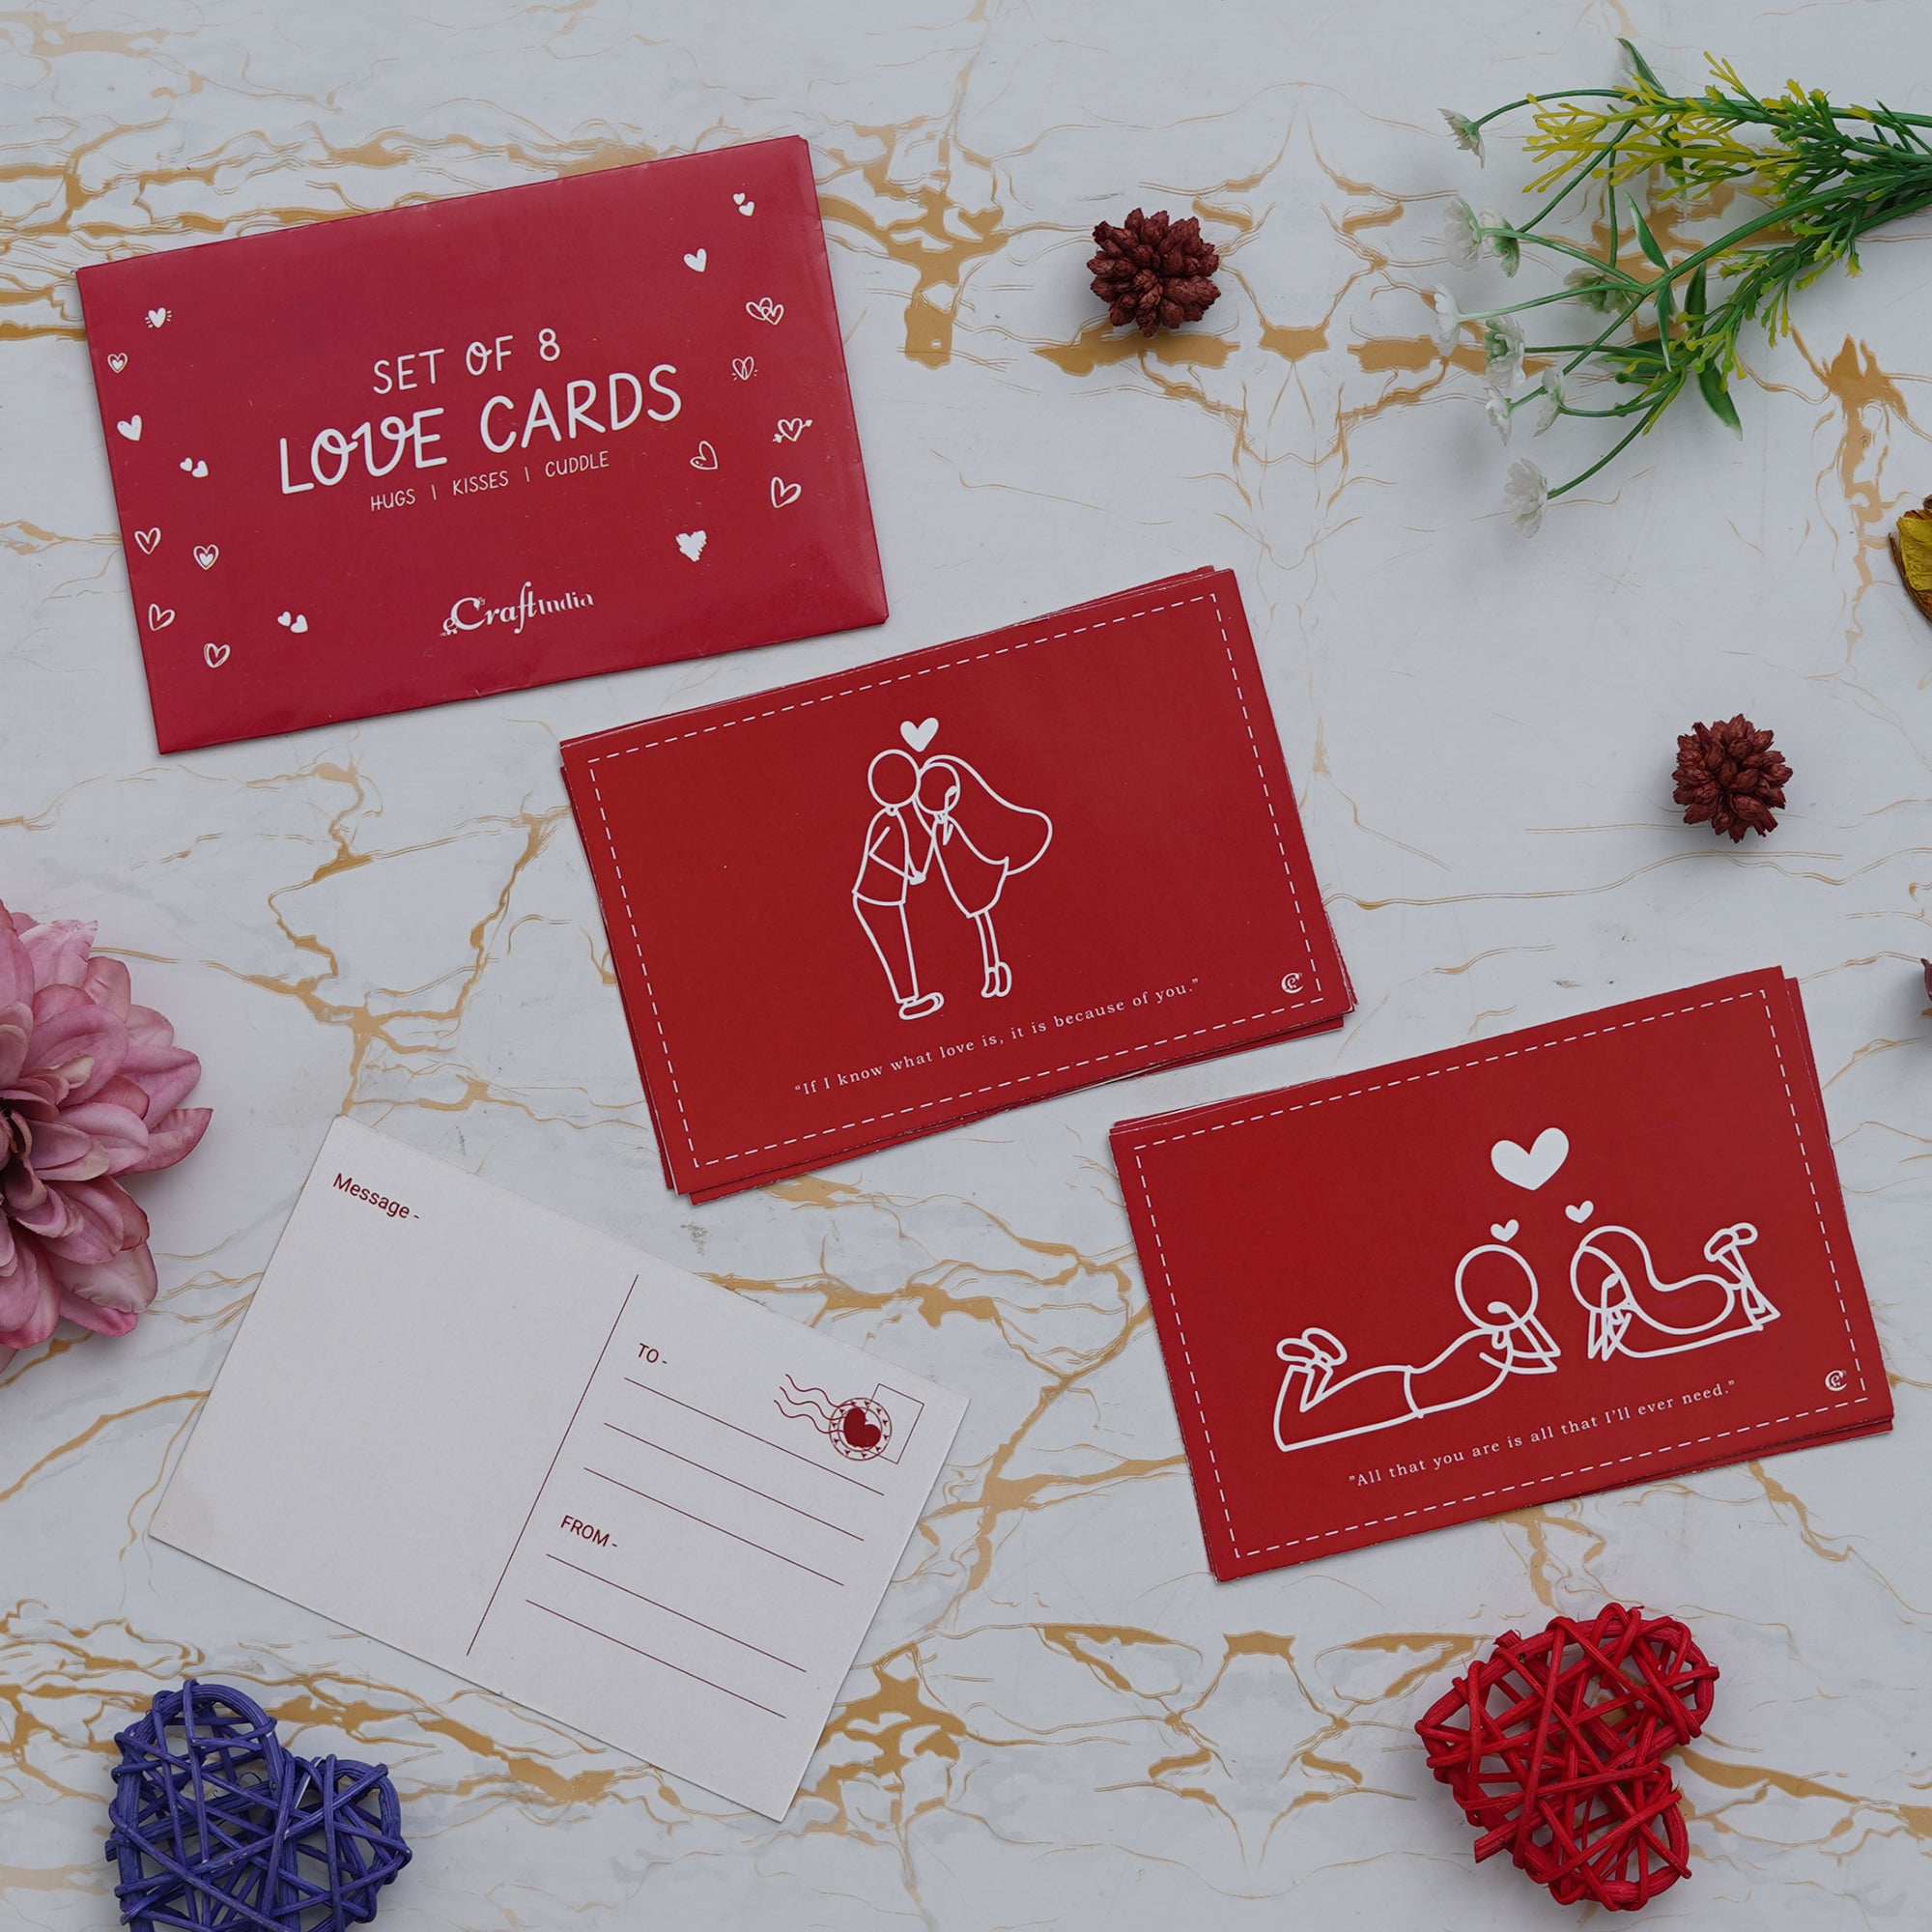 Valentine Combo of Pack of 8 Love Gift Cards, Golden Rose Gift Set 1